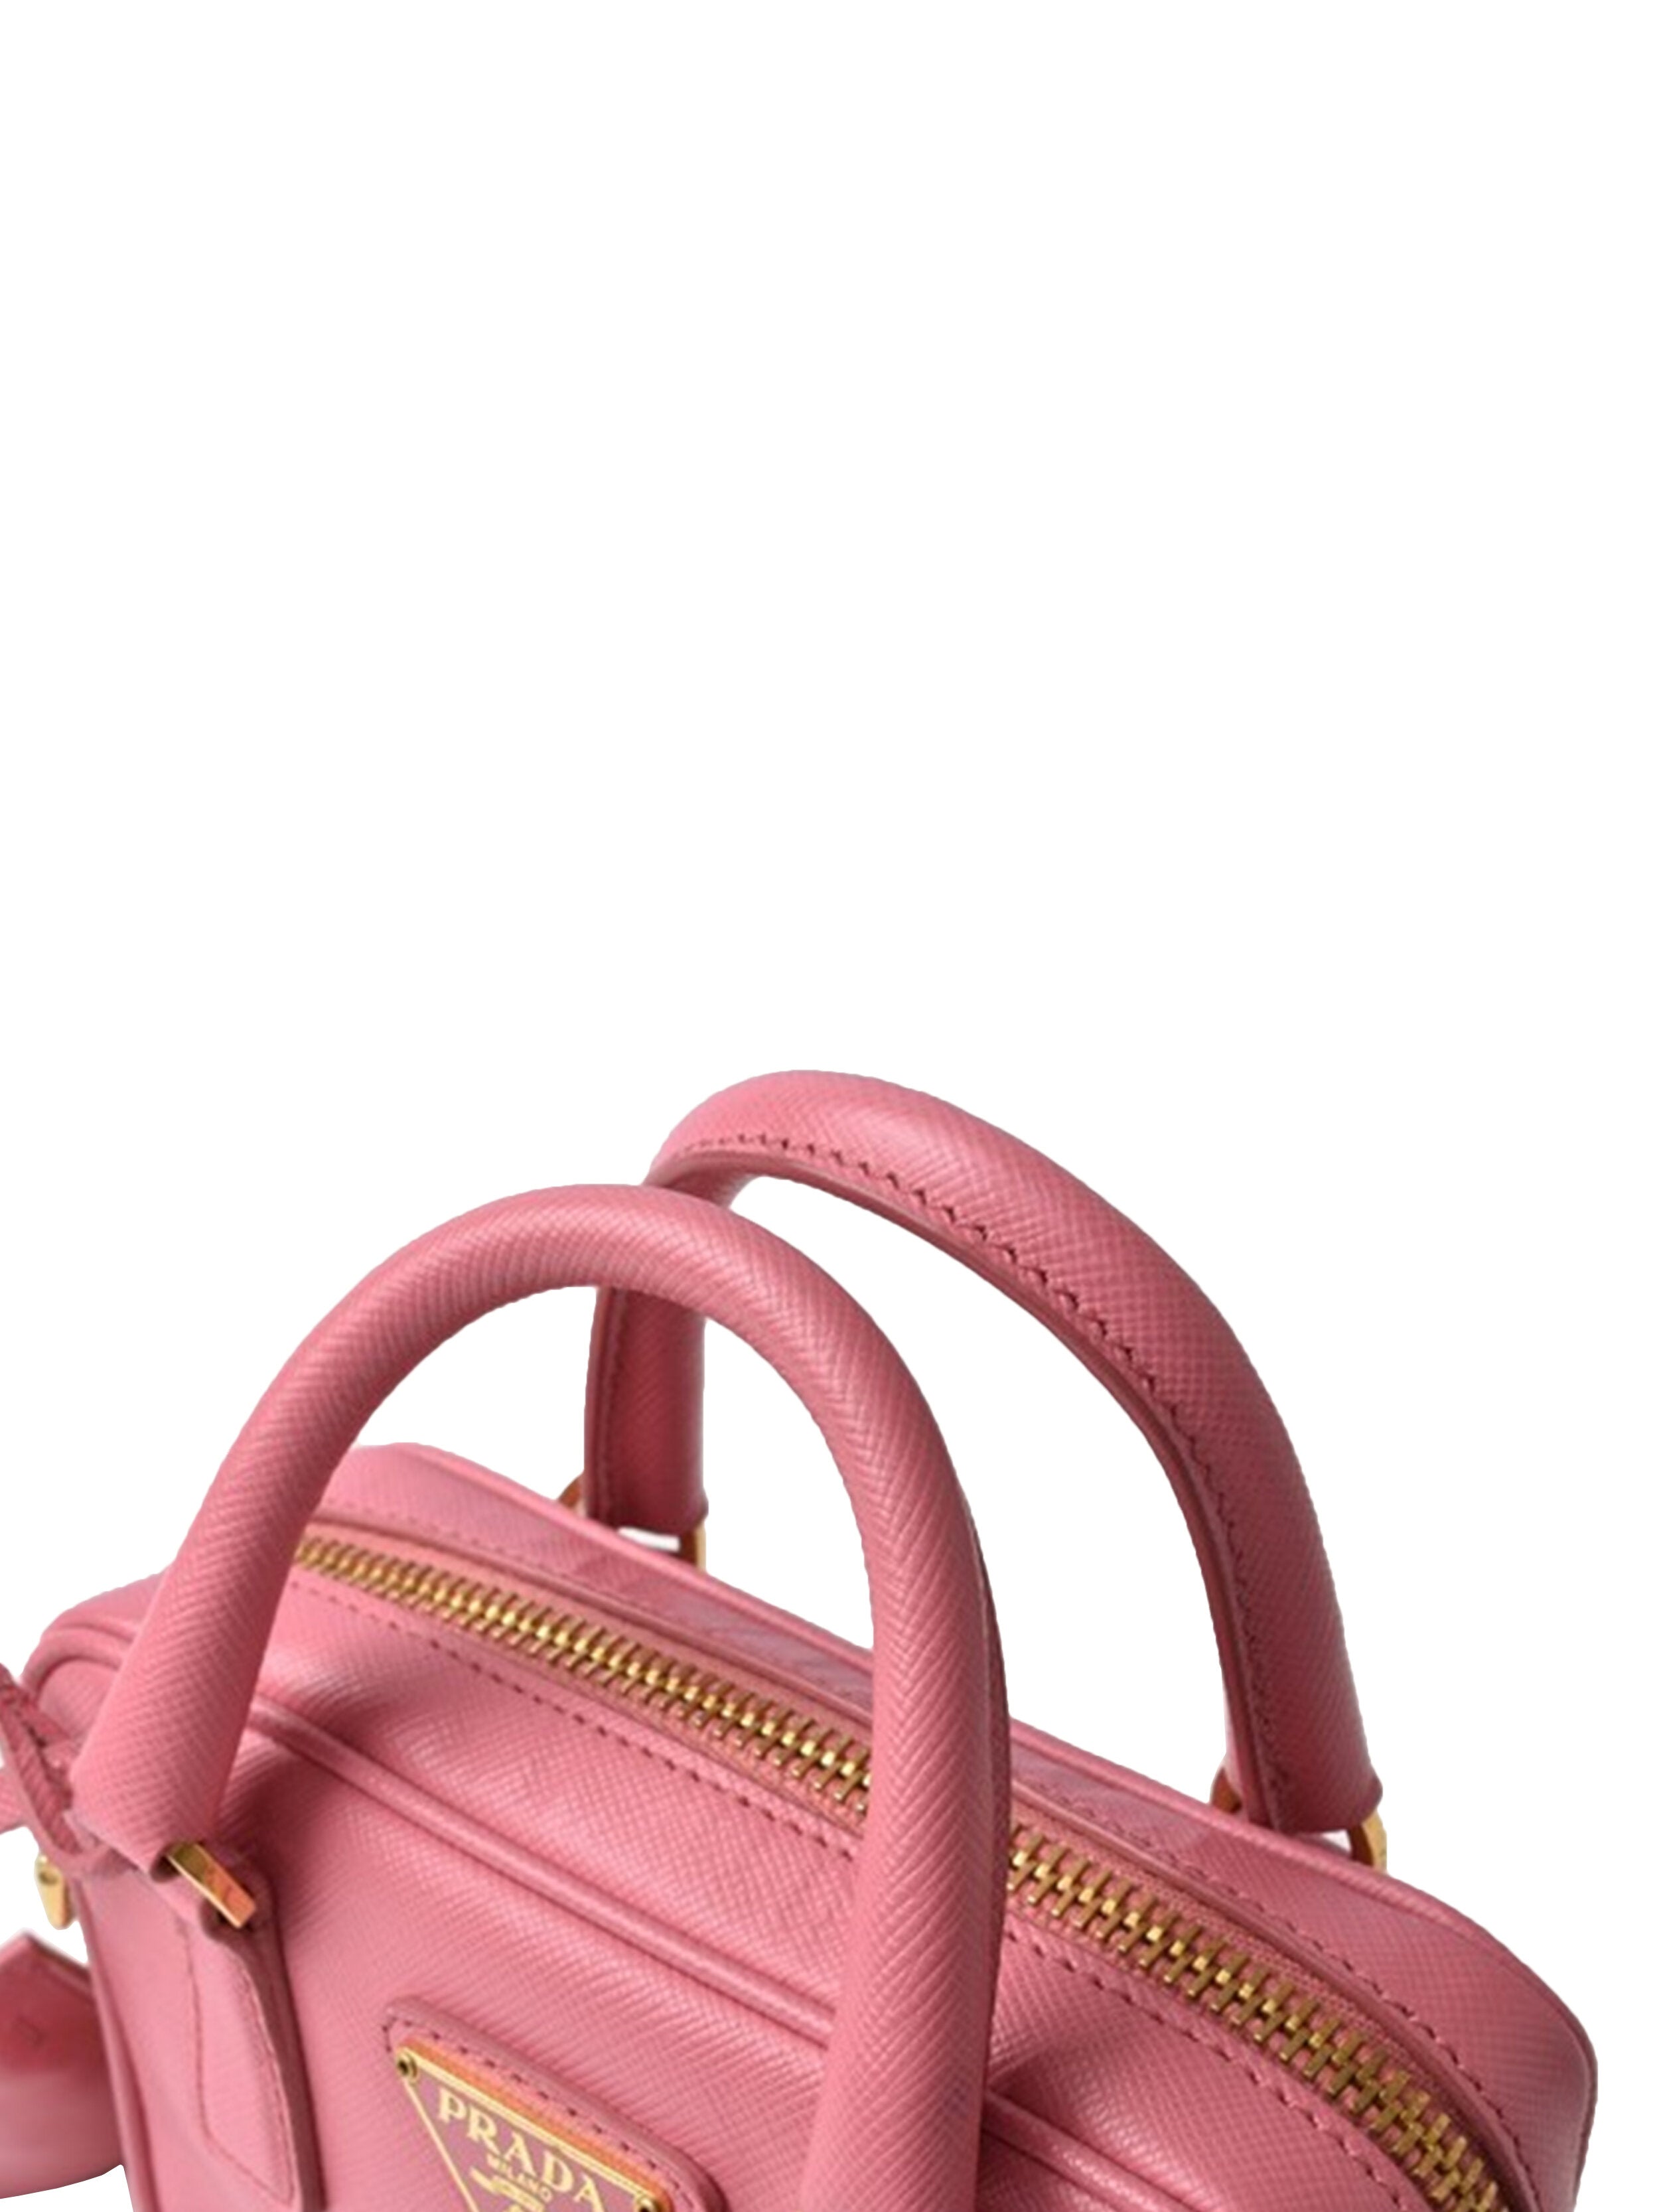 Prada Vintage - Mini Saffiano Leather Satchel Bag - Pink - Leather